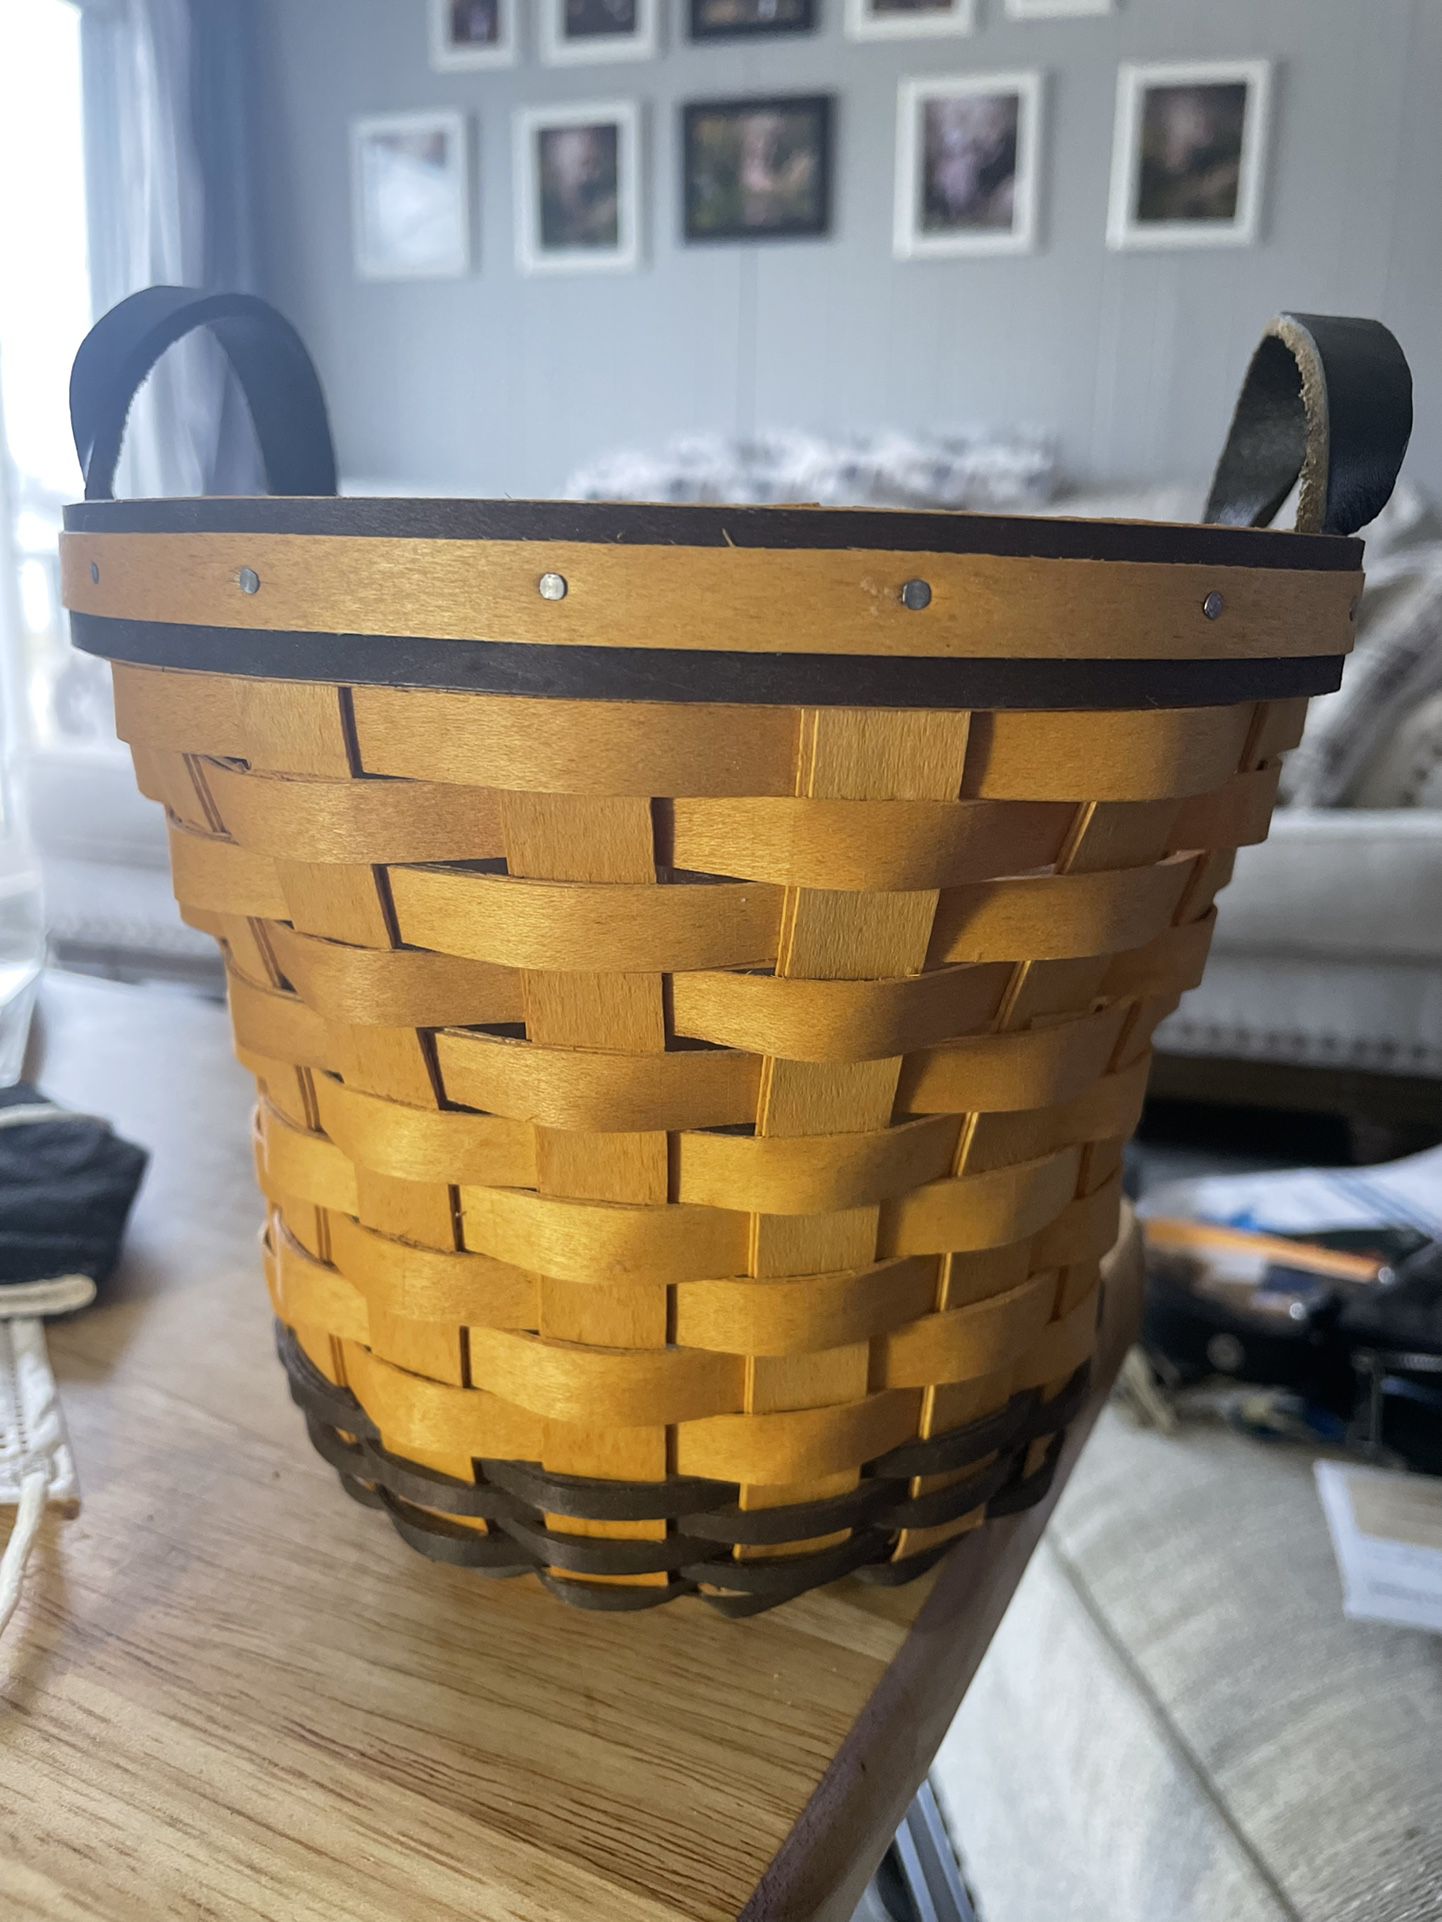 Longaberger Basket Very Good Condition 